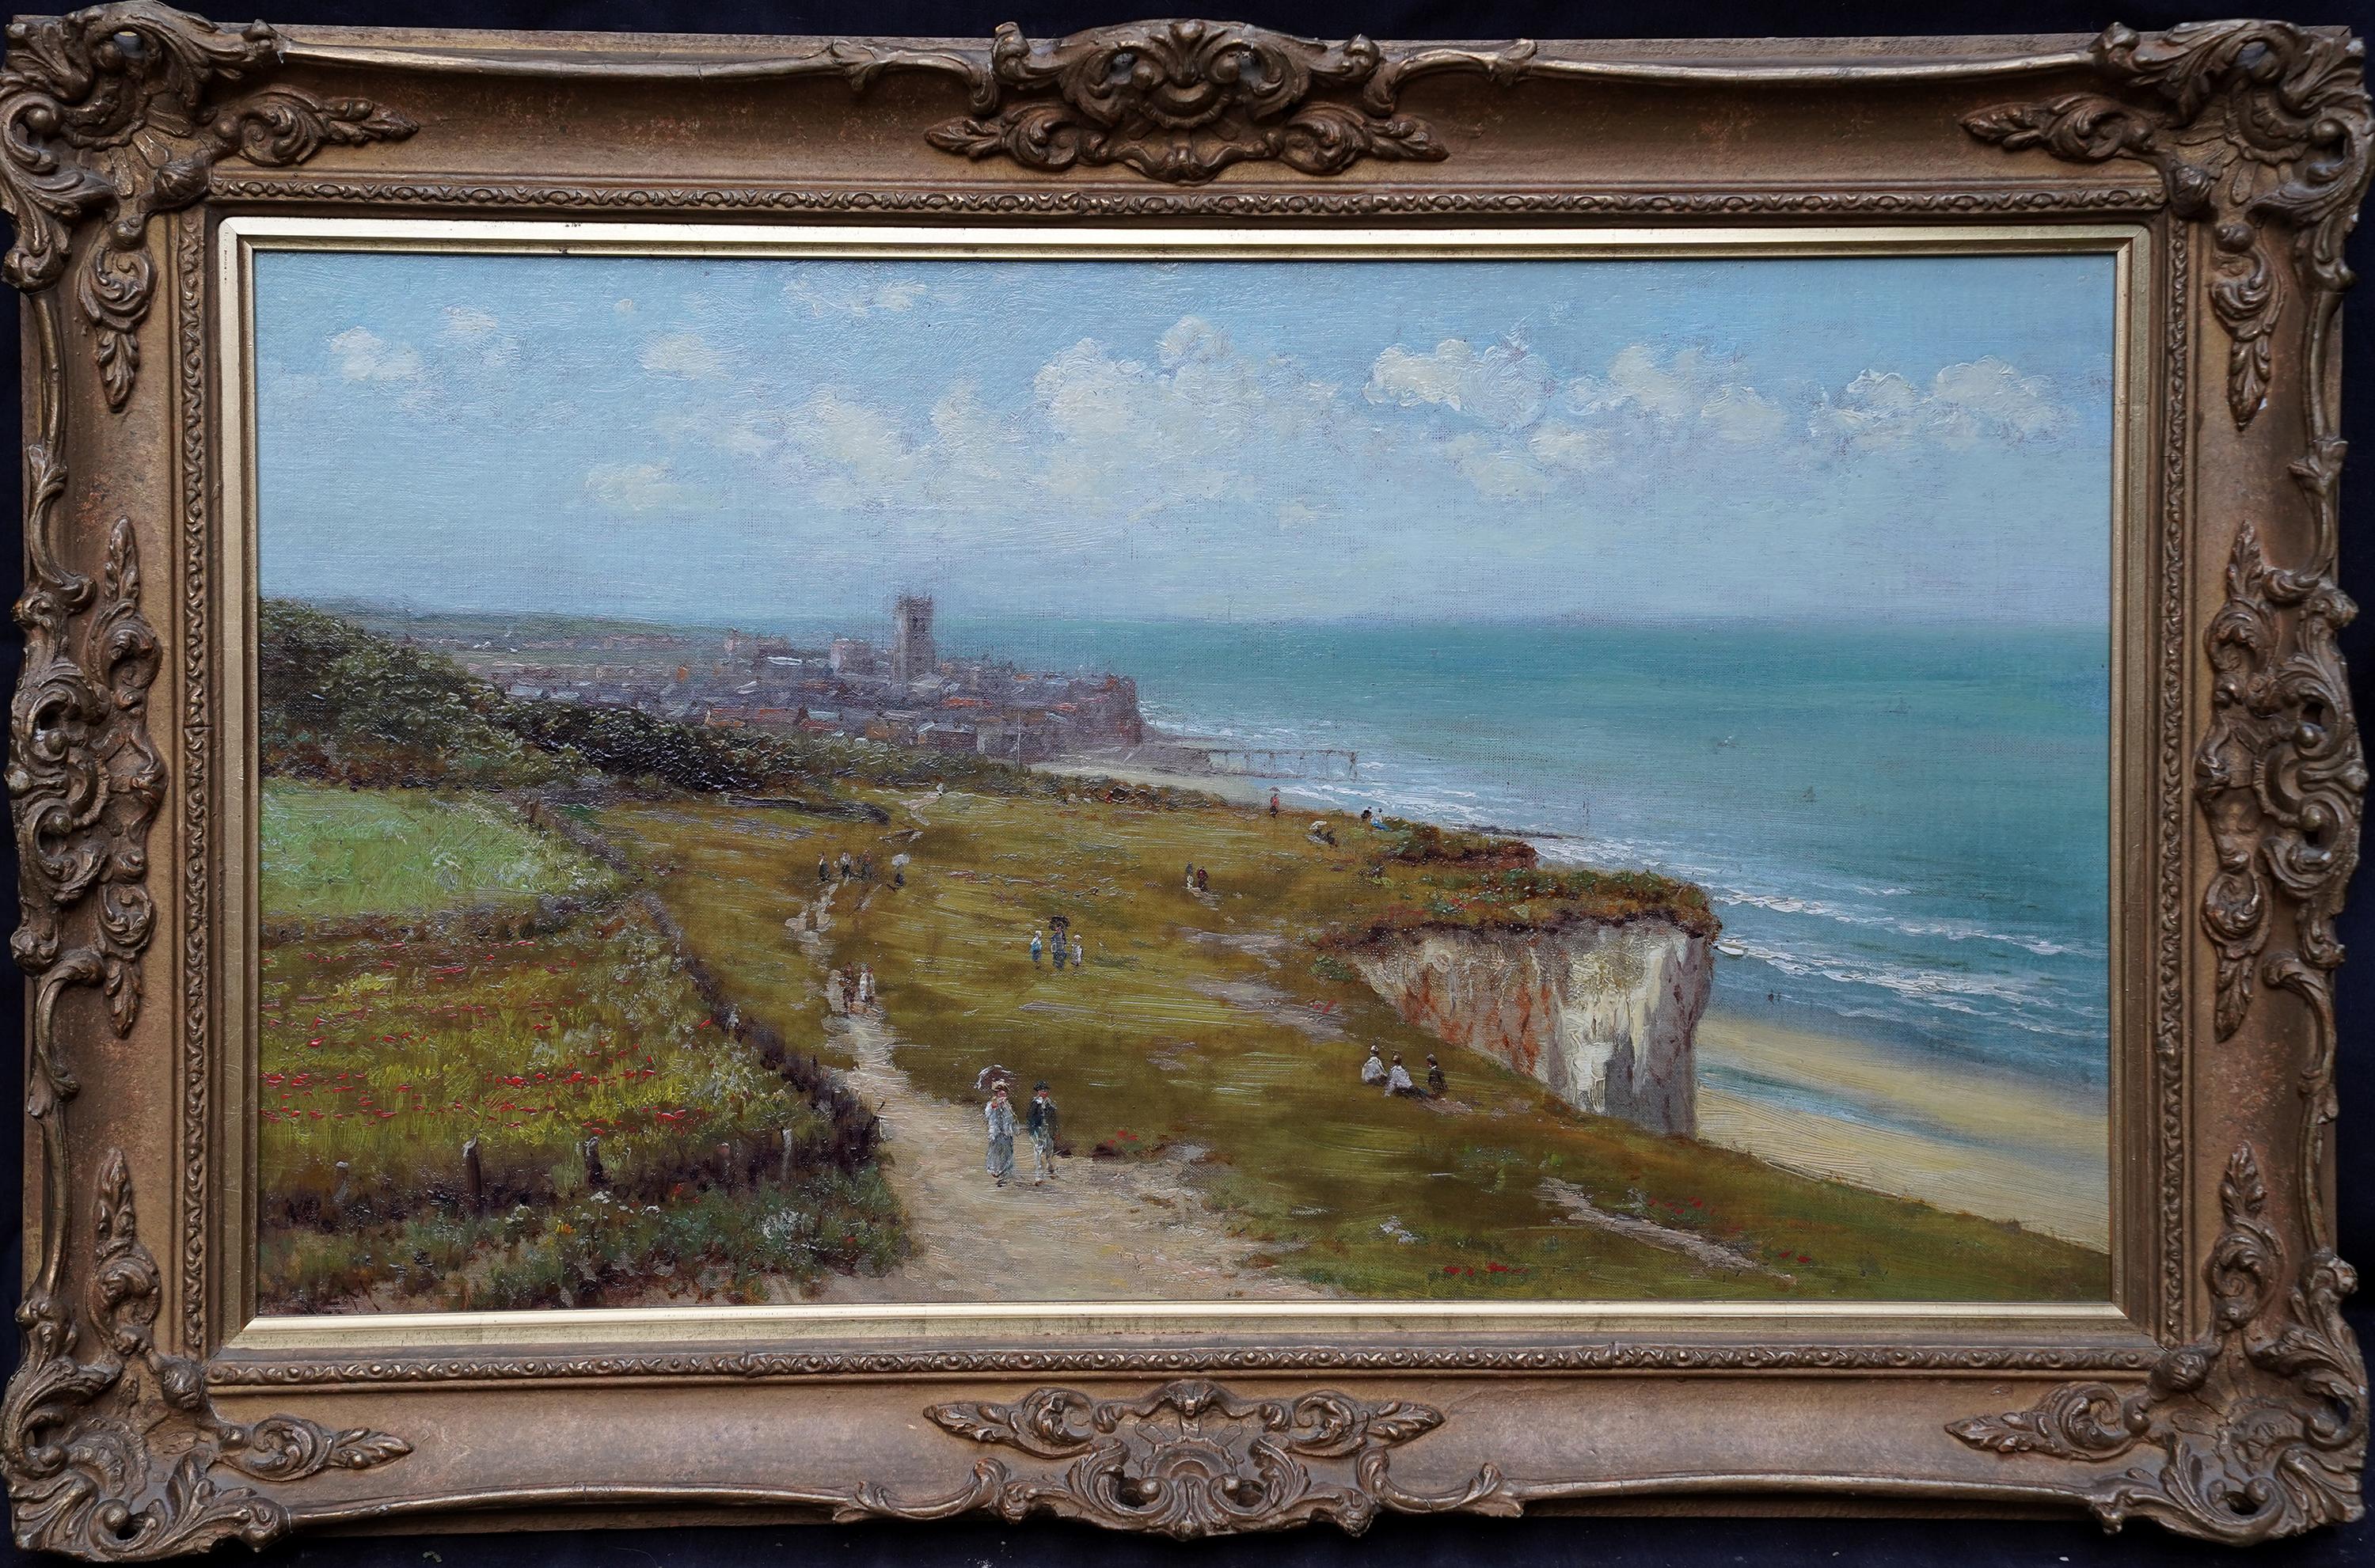 Robert Finlay Mcintyre Landscape Painting - Cromer Coastal Landscape from Cliffs - British 19th century art oil painting